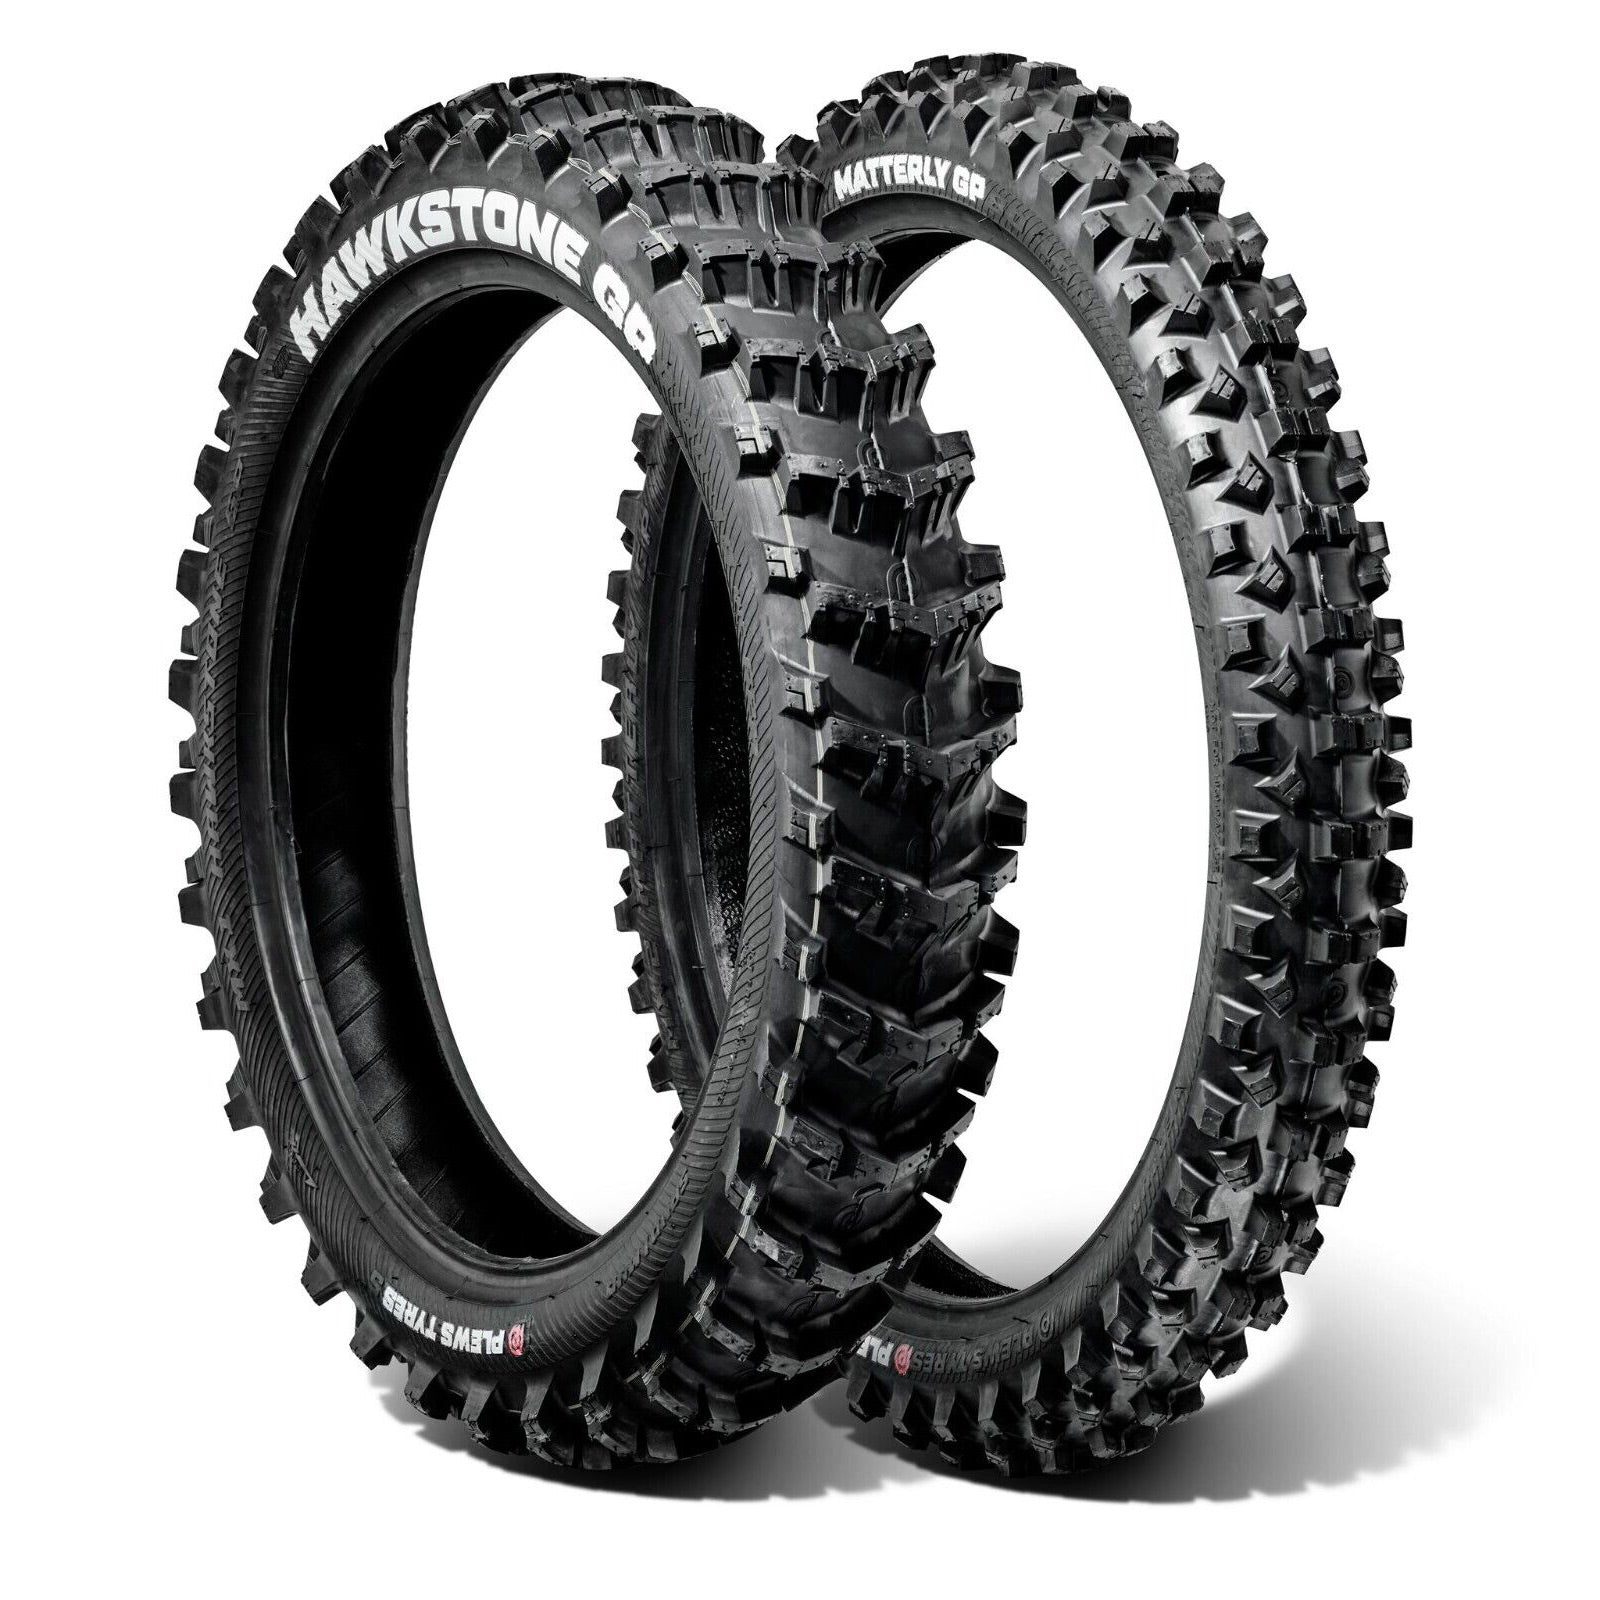 Plews Tyres | Sand Set | MX1 HAWKSTONE Rear & MX2 MATTERLY Font Motocross Tire Bundle - 3/4 view